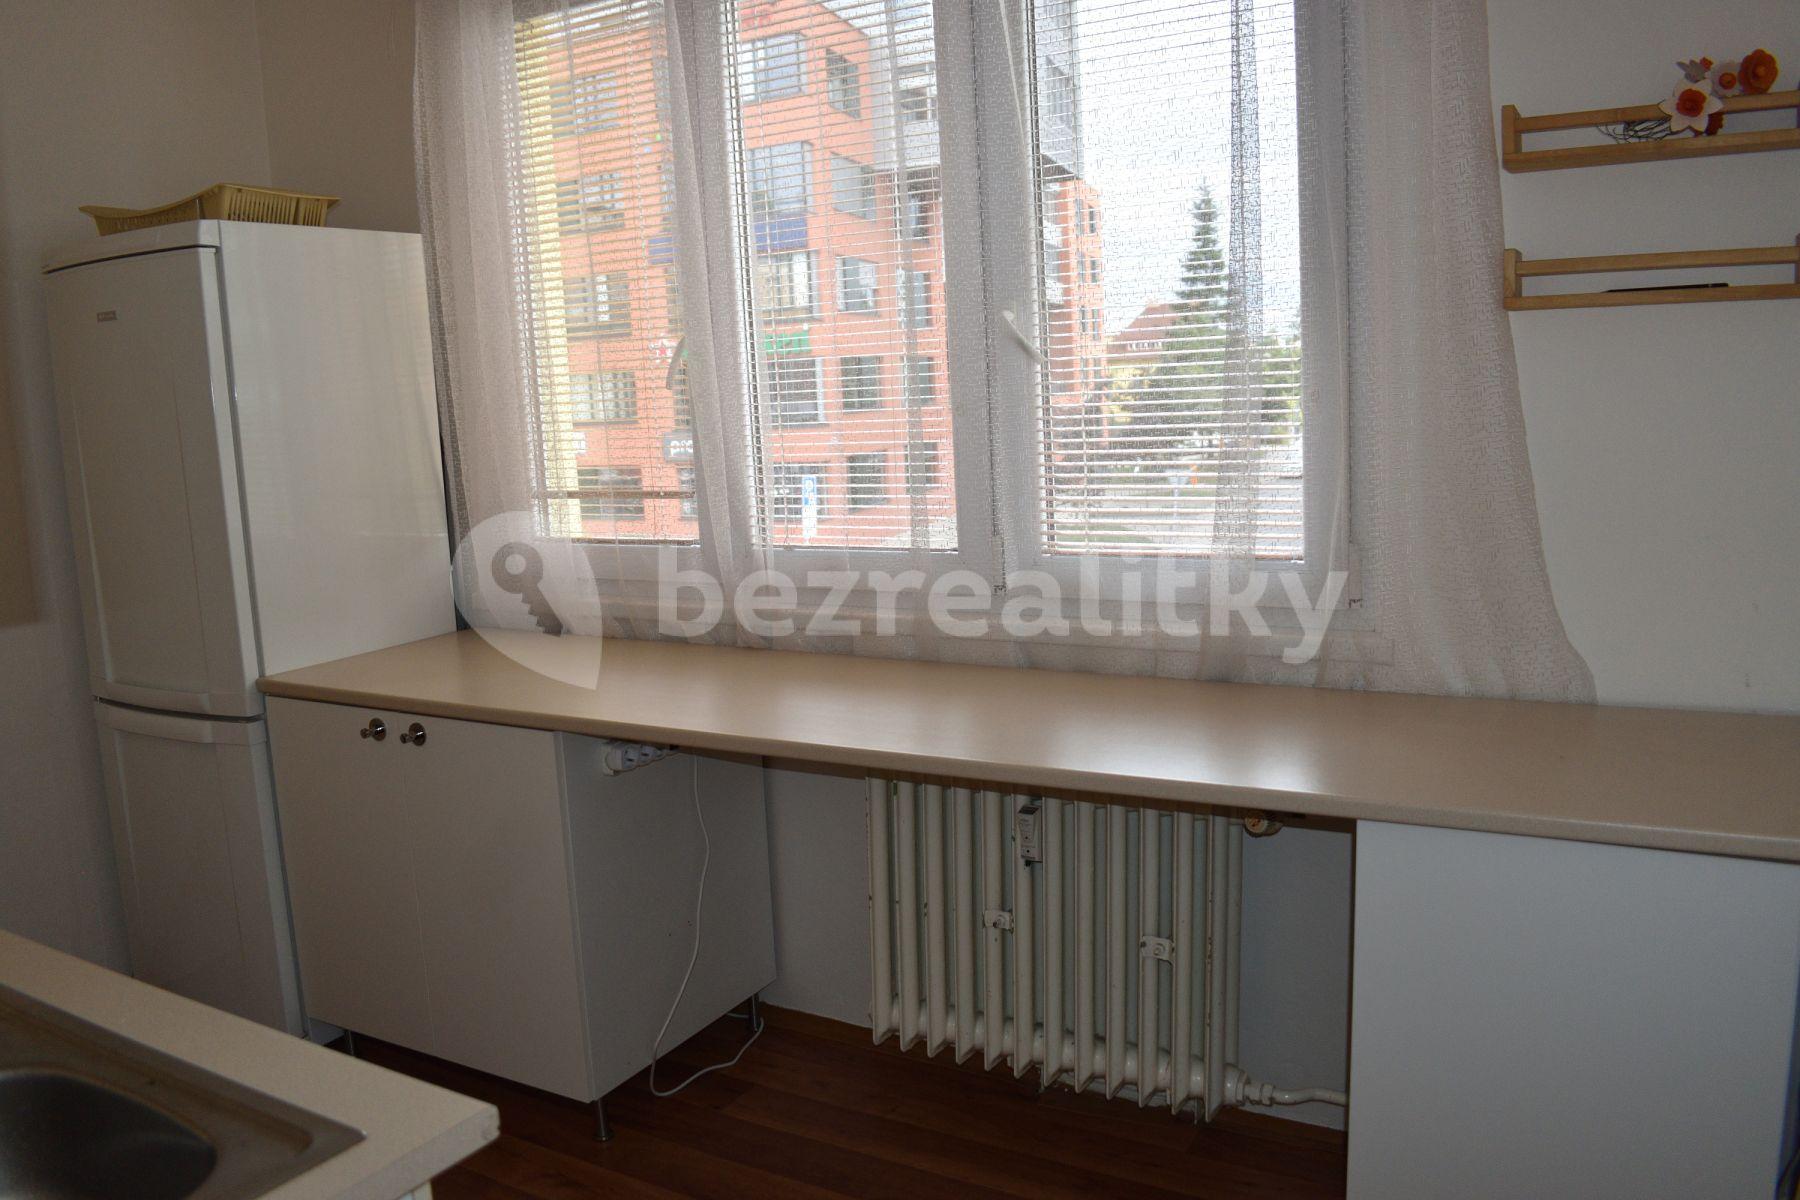 2 bedroom flat to rent, 54 m², Antala Staška, Prague, Prague